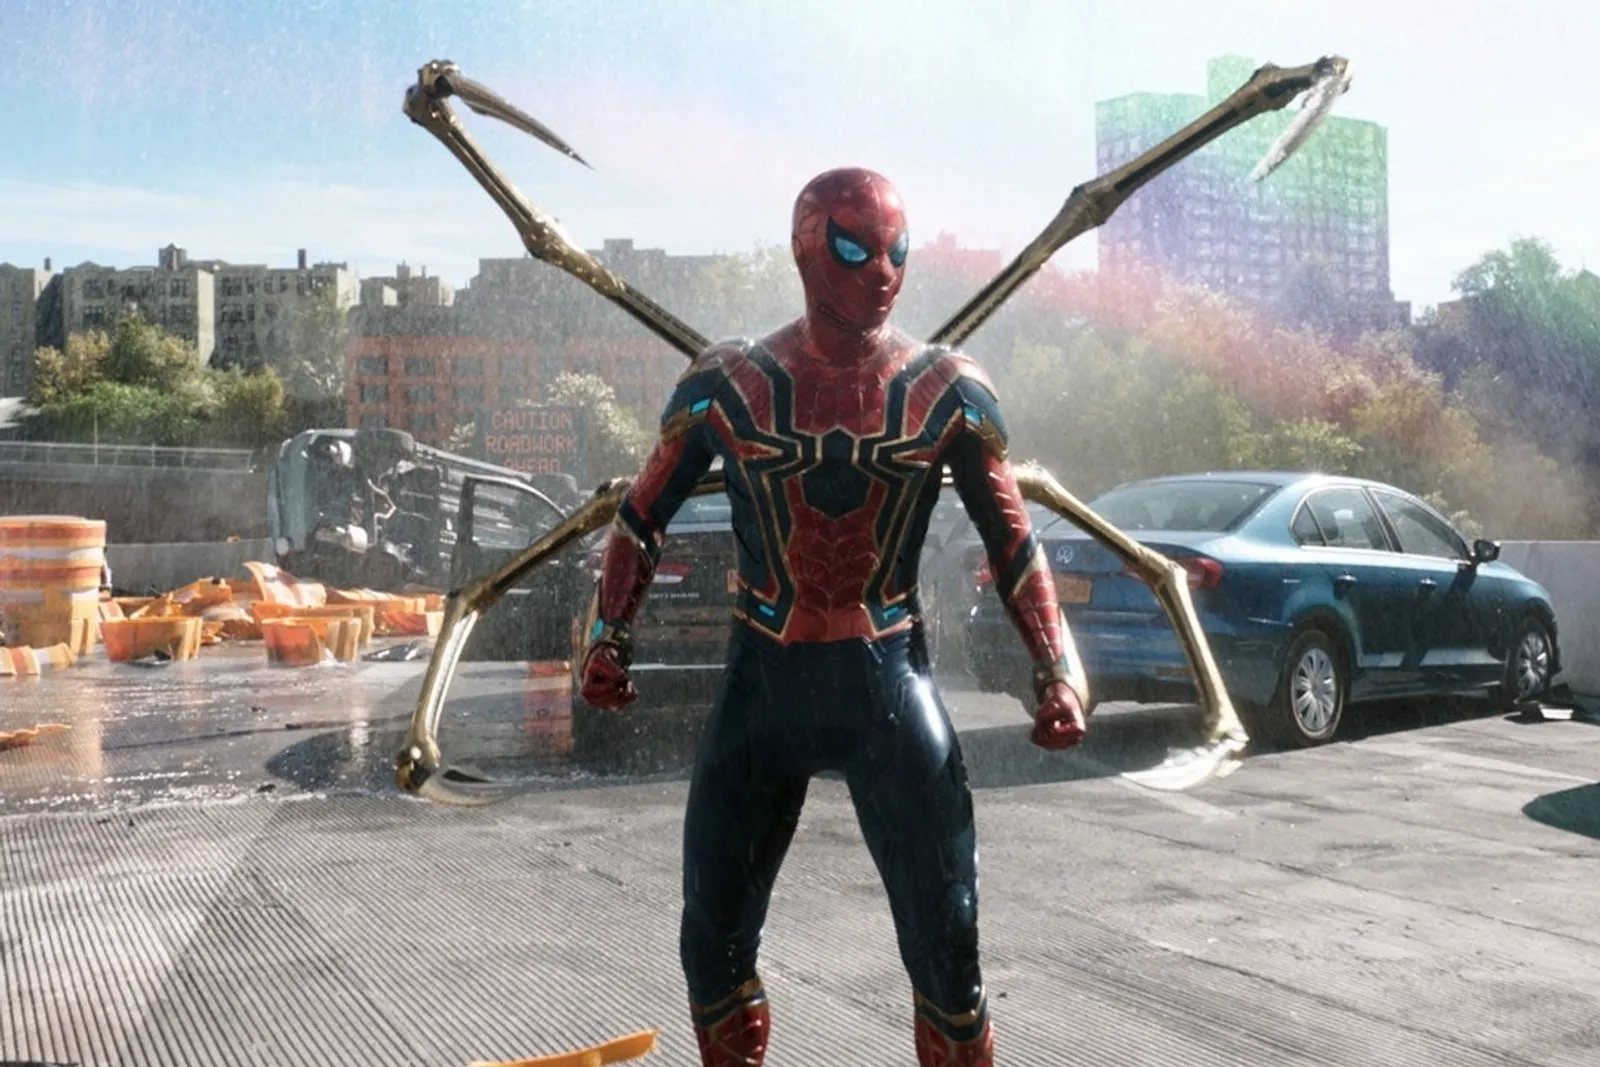 Rilis Trailer, 7 Fakta 'Spider-Man: No Way Home' yang Bikin Penasaran